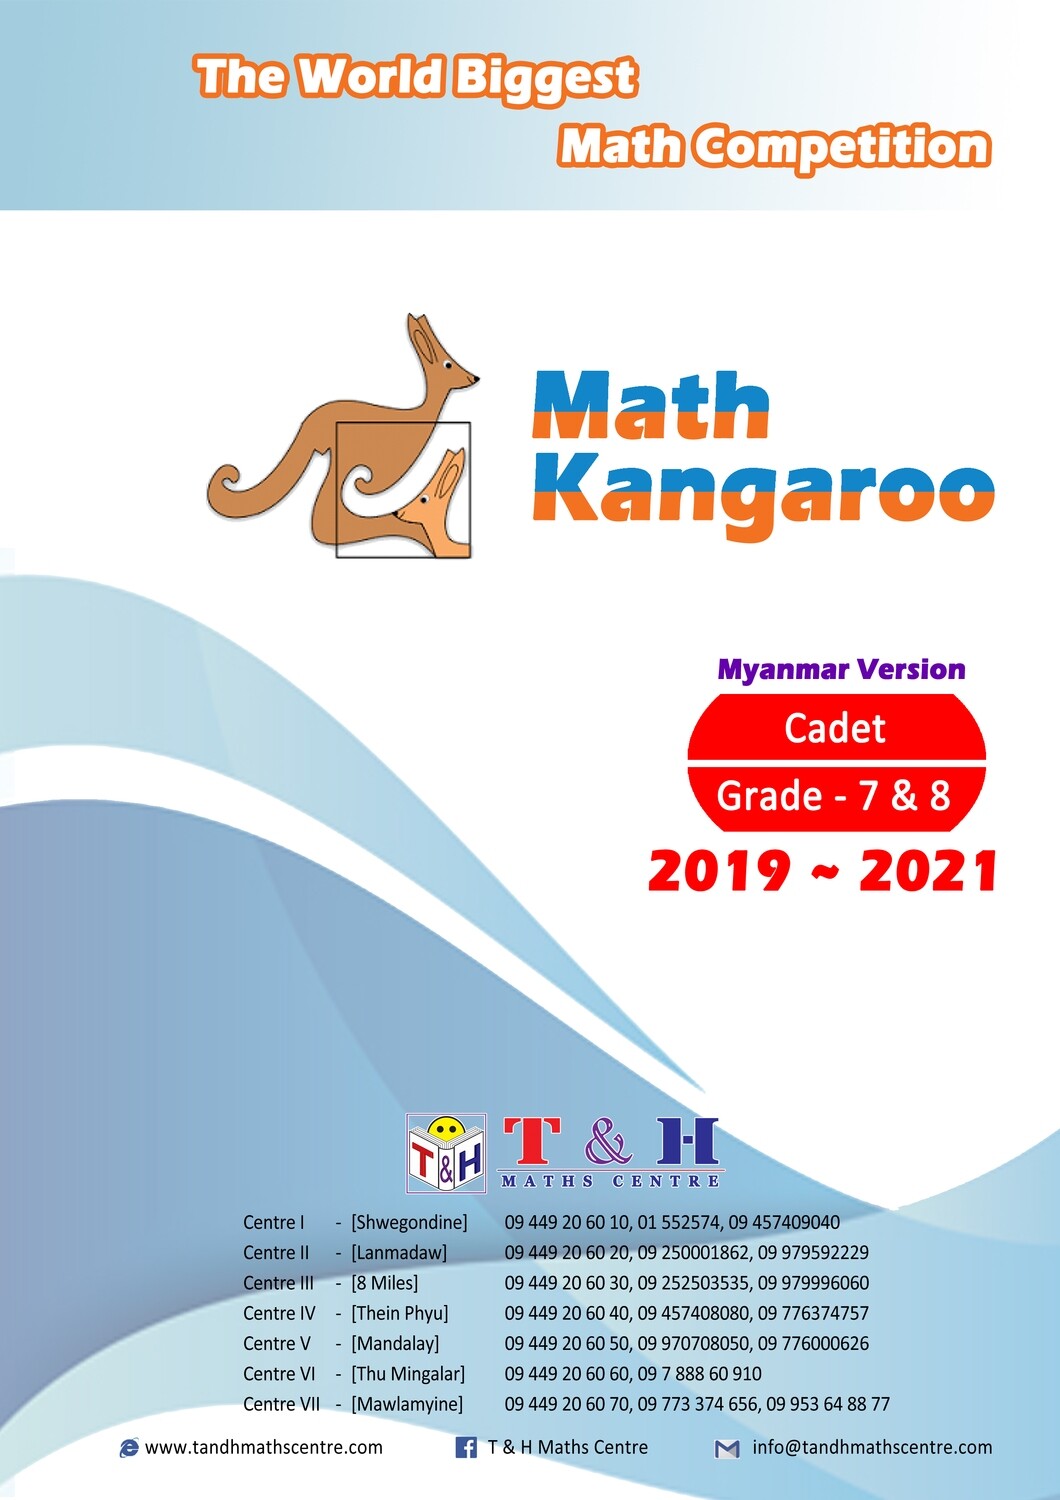 Kangaroo (Cadet) Grade 7 & 8 (2019 to 2021)